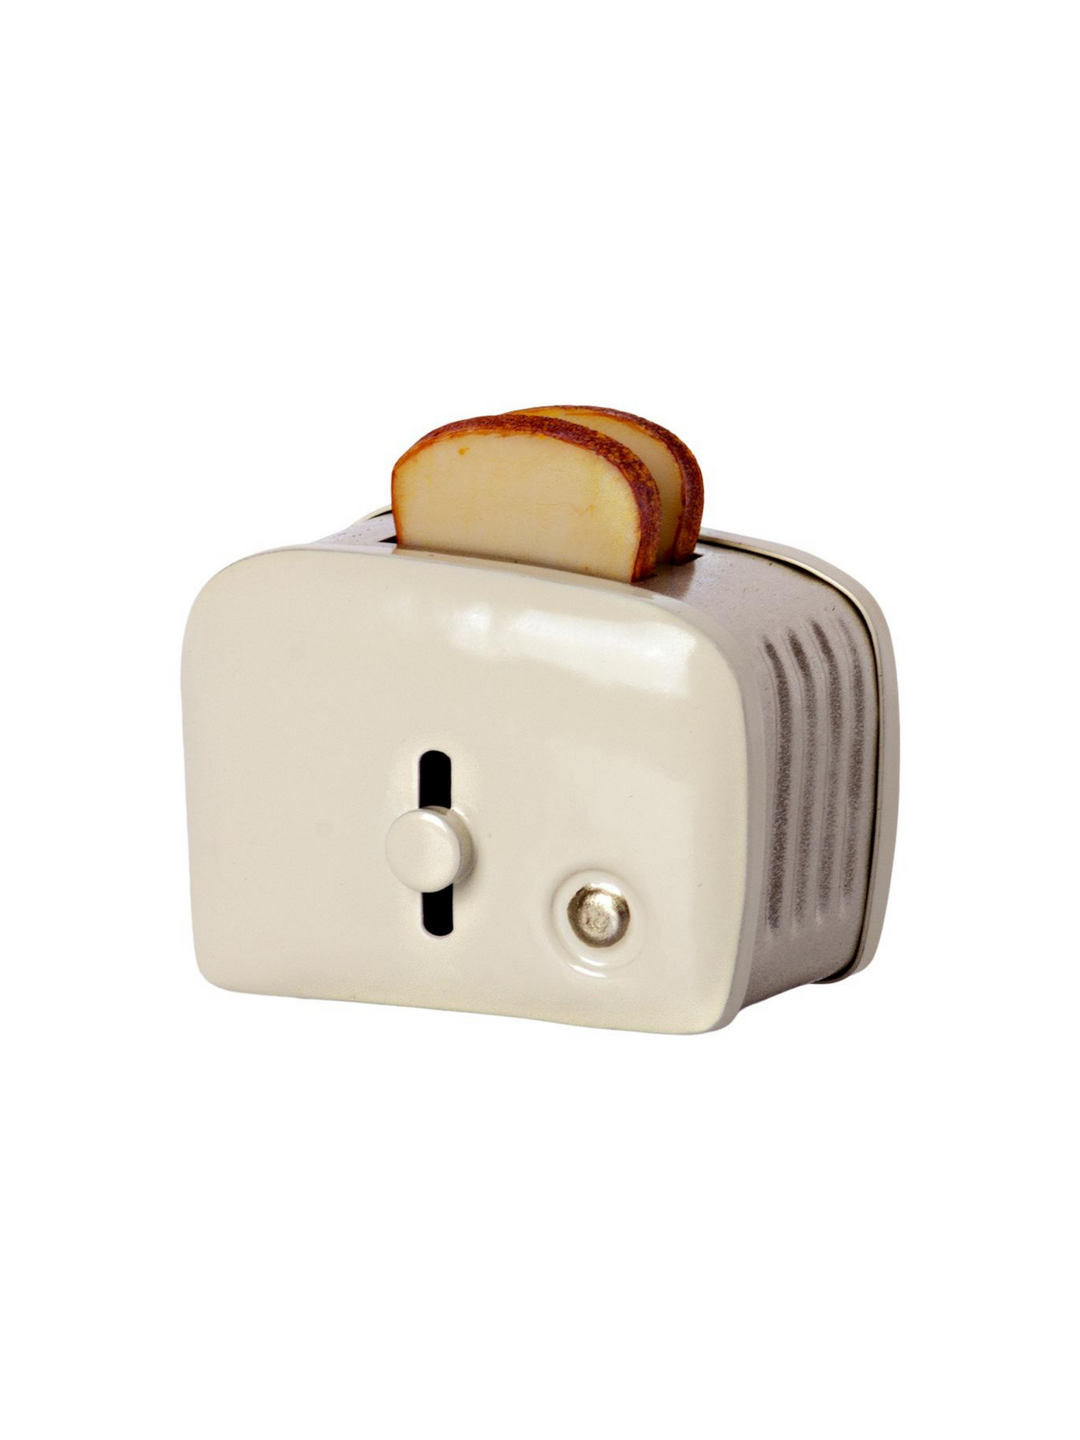 Dollhouse Kitchen Delight: Miniature Toaster & Bread in Off-White